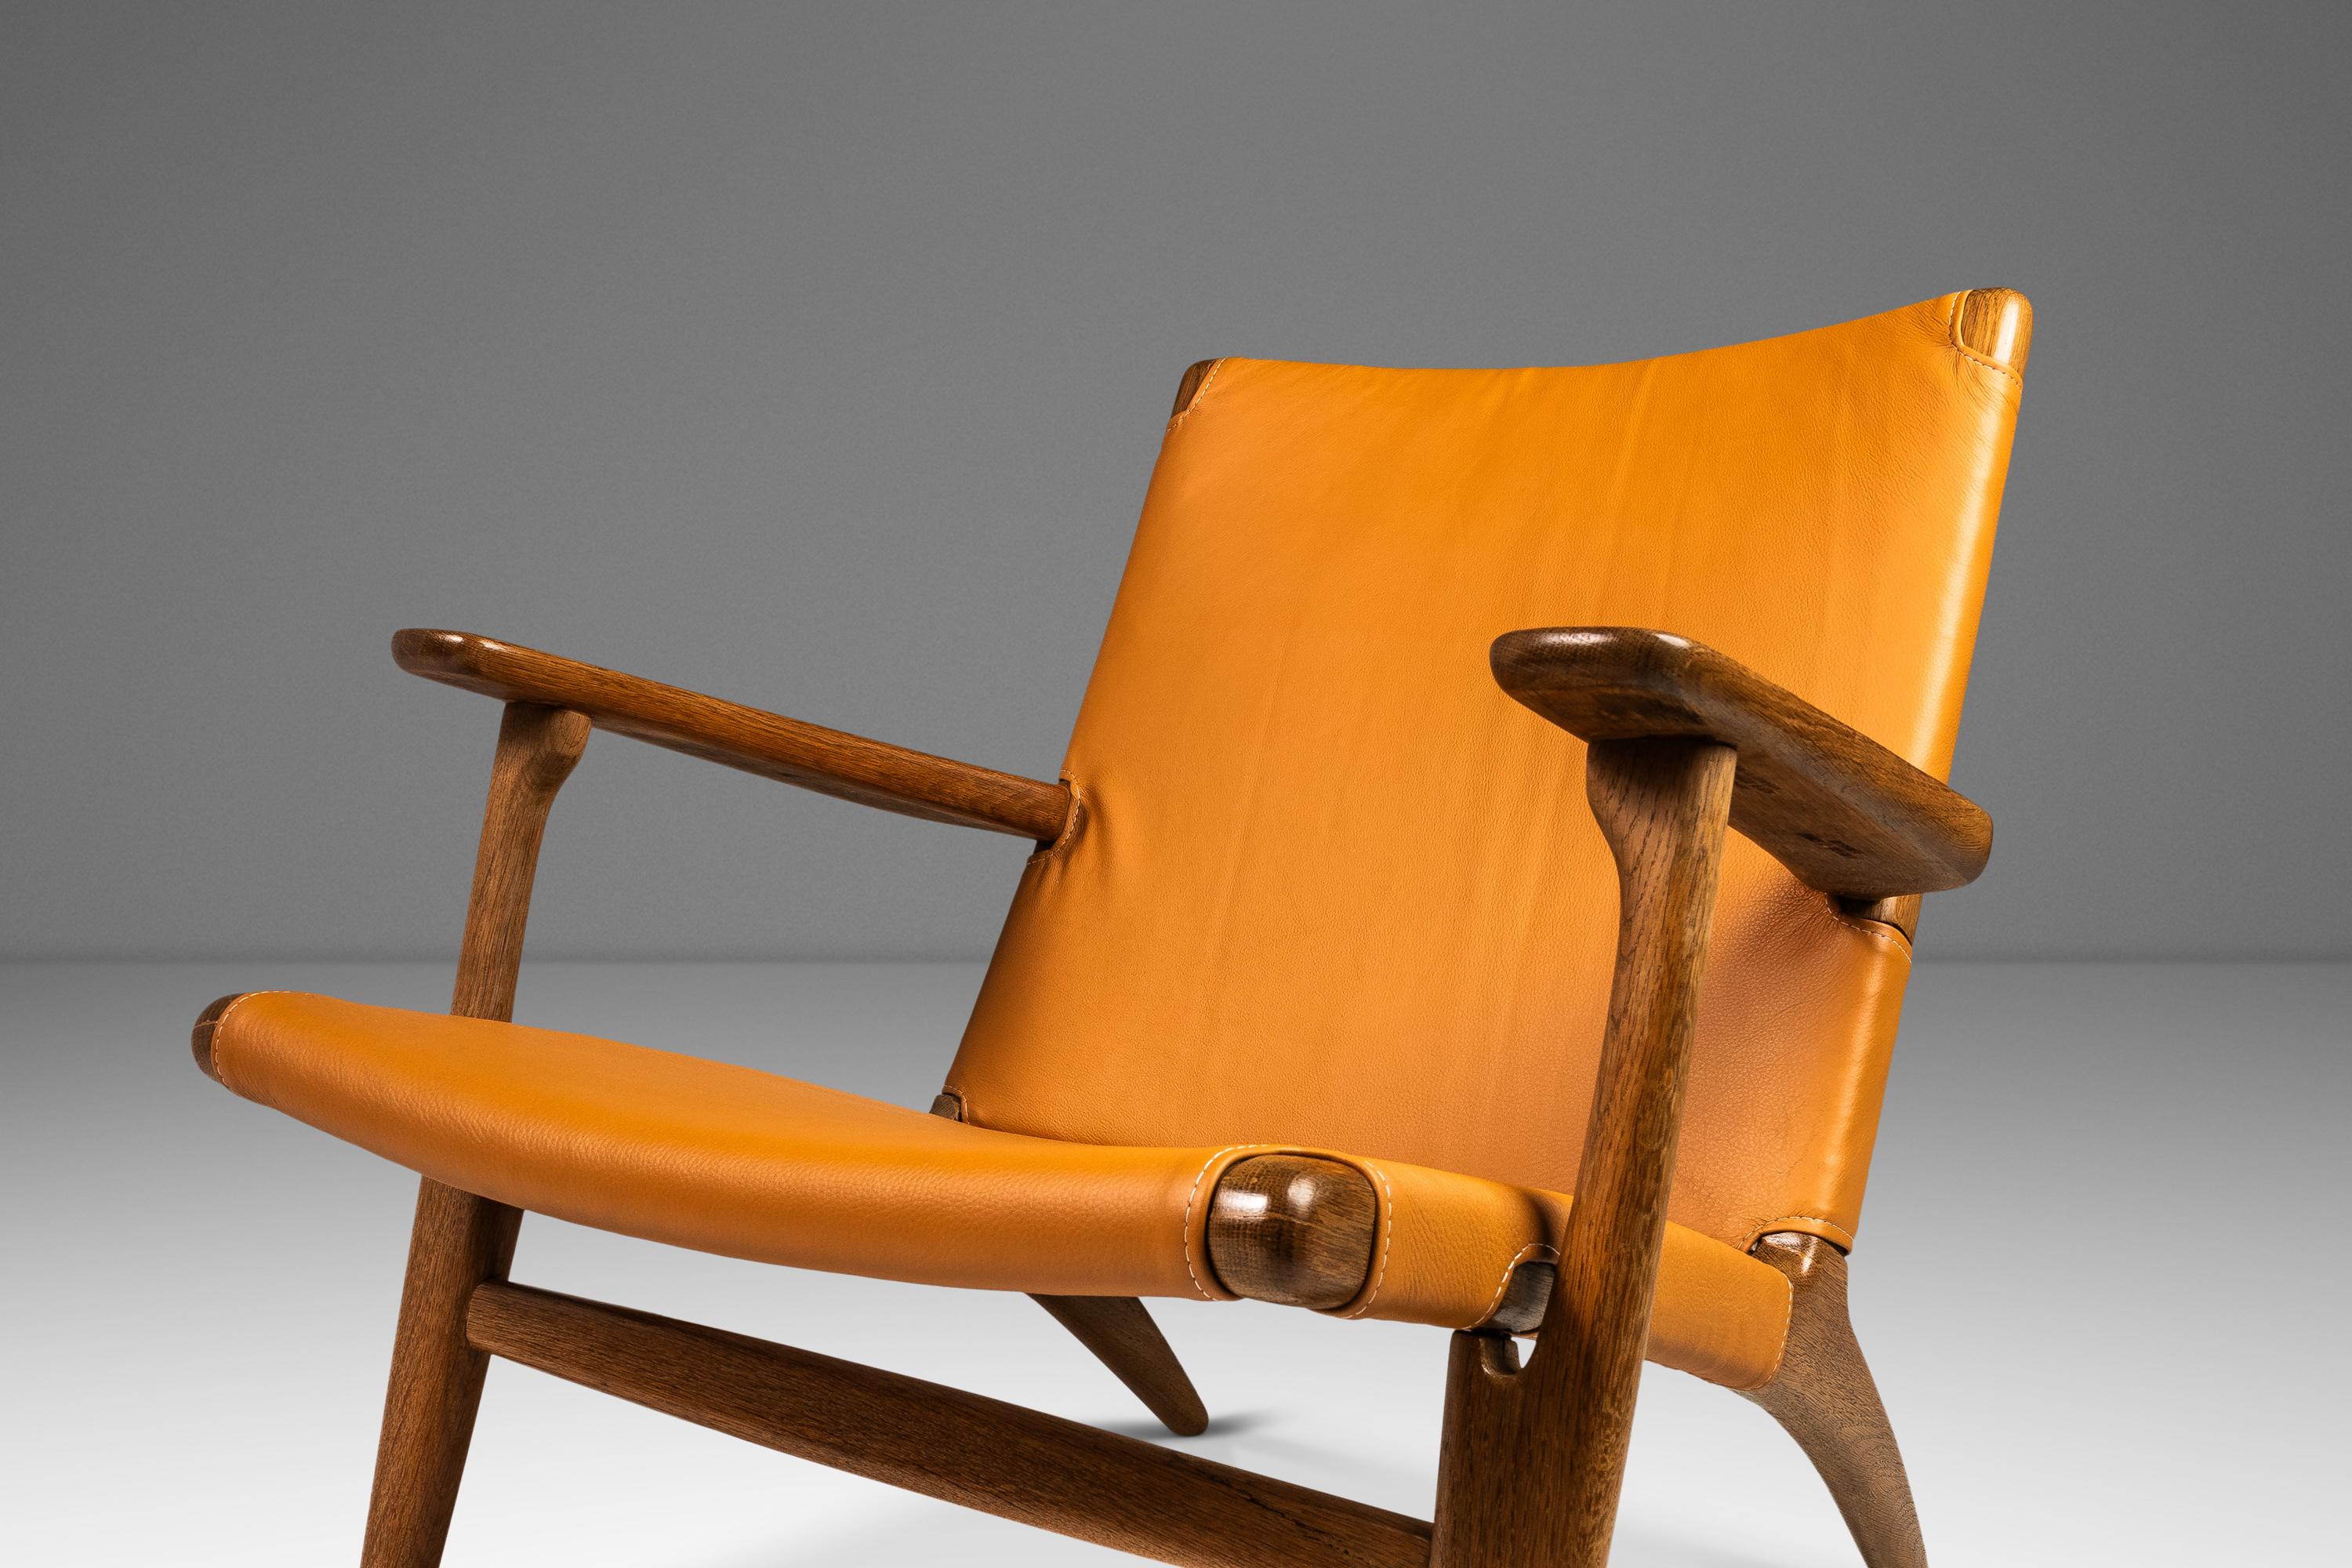  Danish Mid-Century CH 25 Lounge Chair by Hans J. Wegner, Oak & Leather, c. 1950 For Sale 14